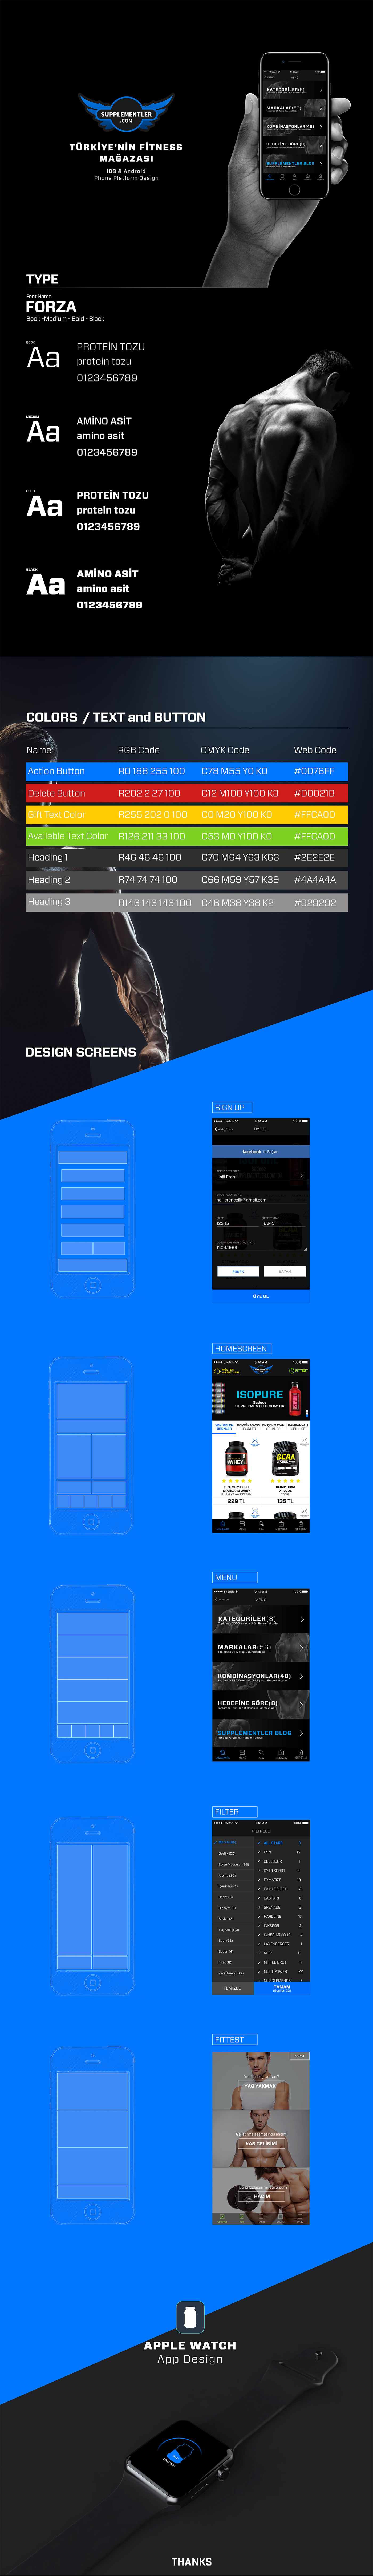 ios app design application Mobile app UI/UX user interface ux UX design Digital product design product design 